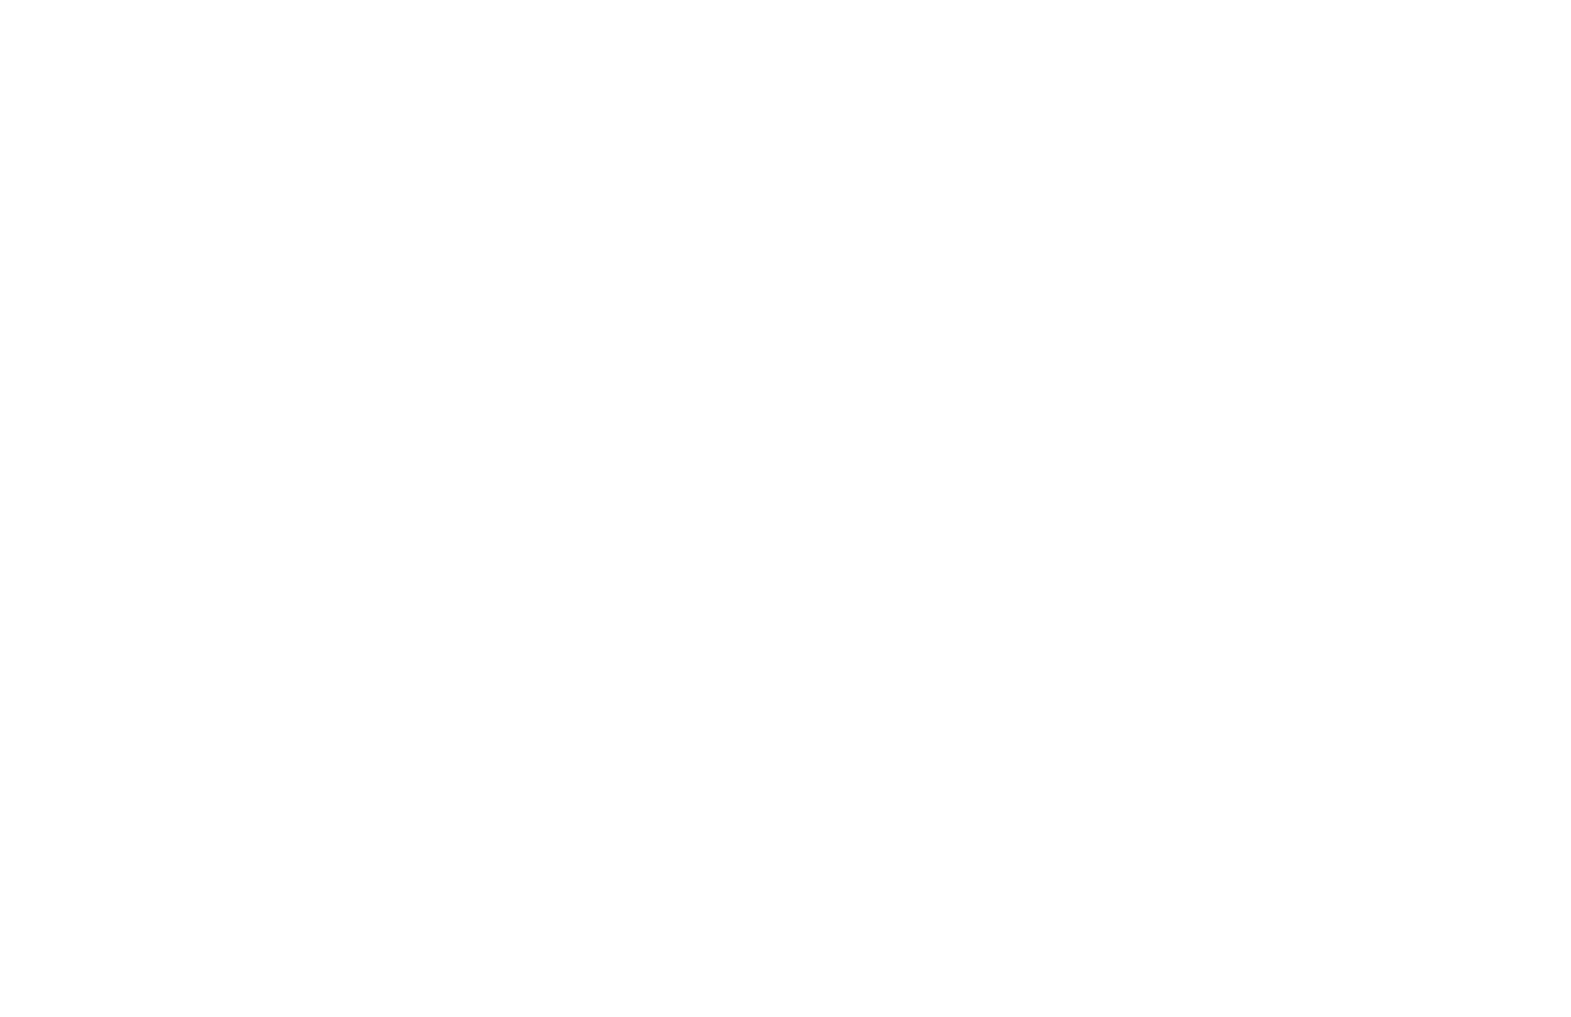 Broadway Floral & Gift Gallery - Denville, NJ 07834 - (973)625-2772 | ShowMeLocal.com